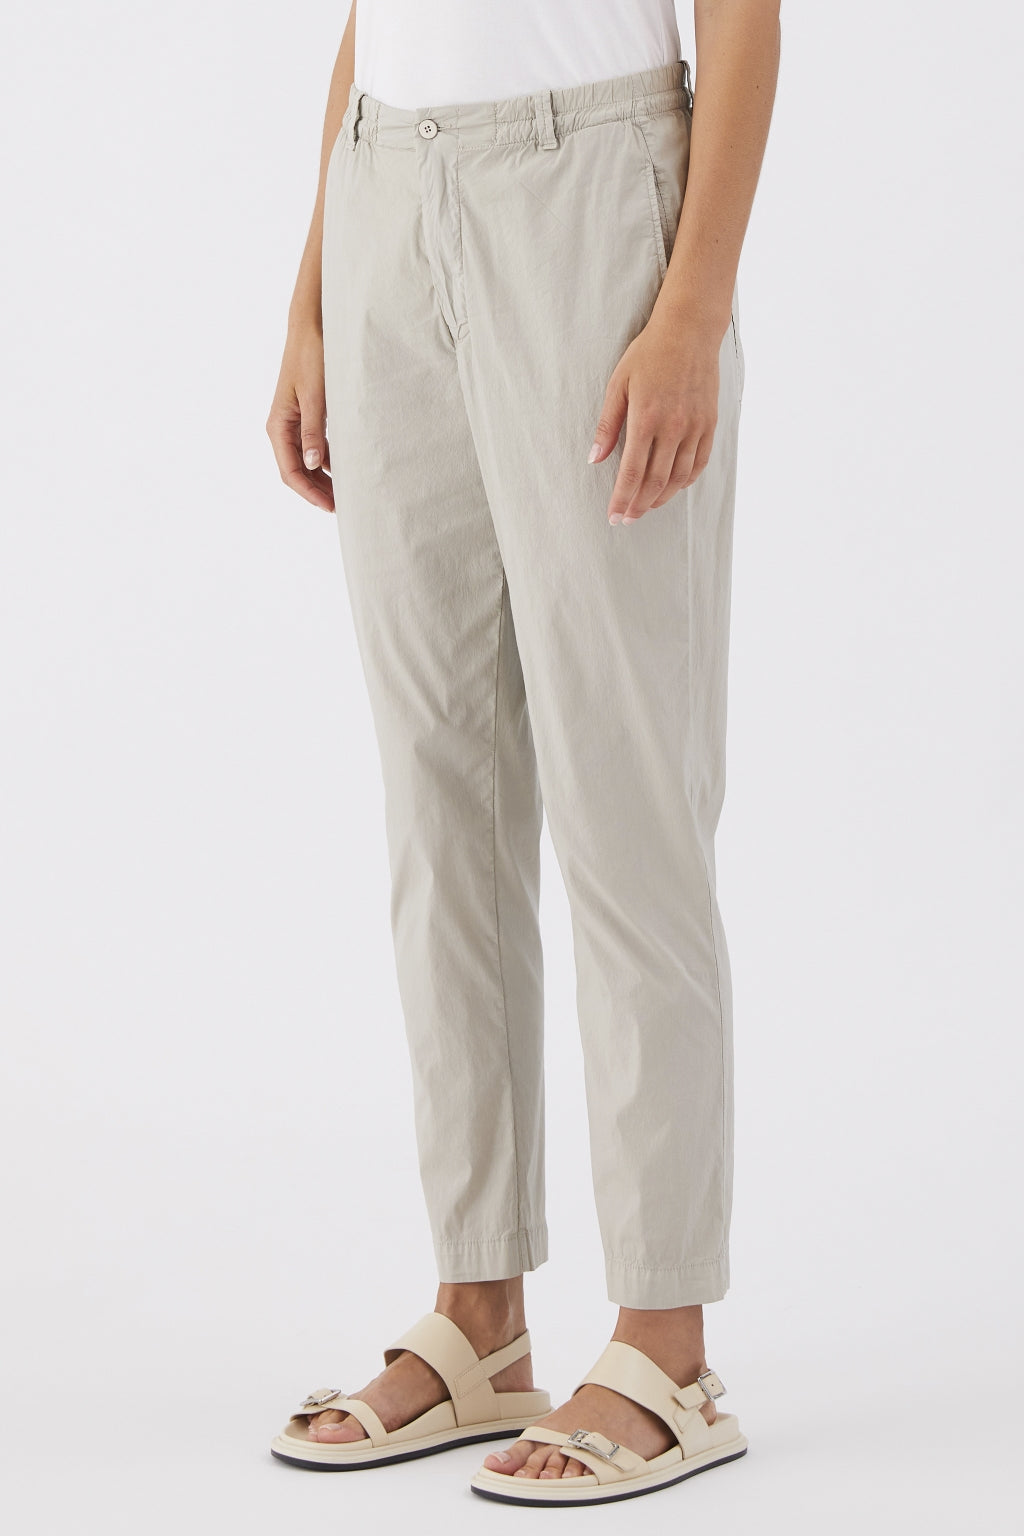 Cfdtrwm227 trousers - white TRANSIT